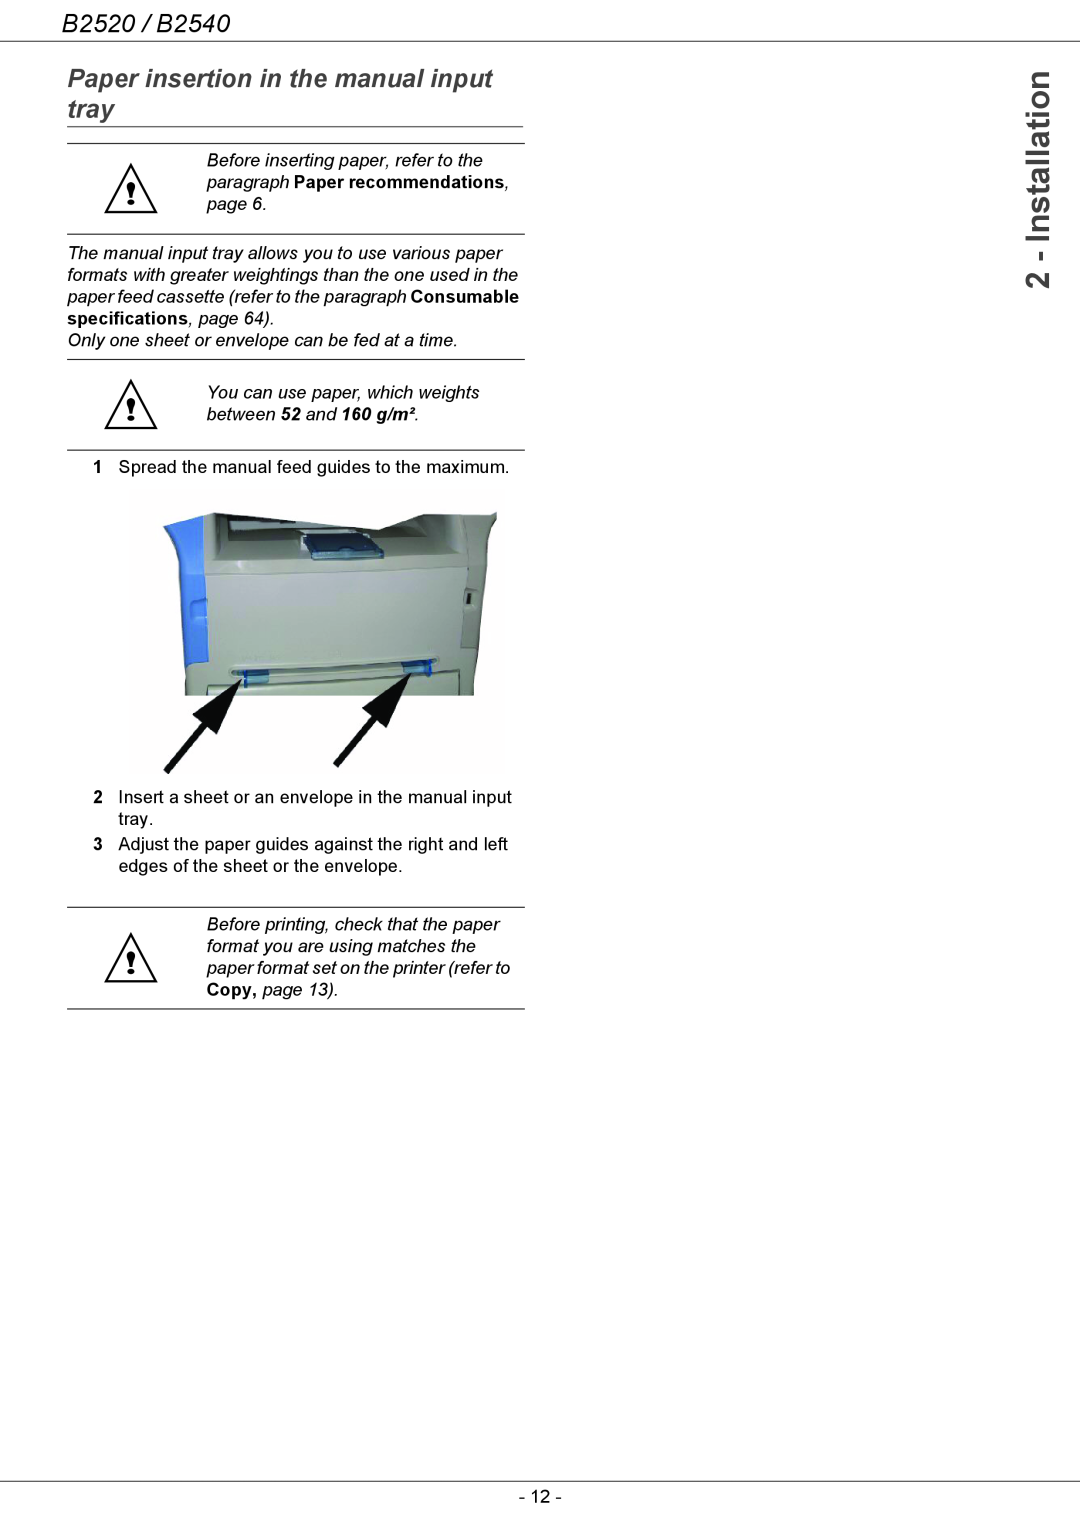 Oki B2500 Series Paper insertion in the manual input tray, Installation, B2520 / B2540 